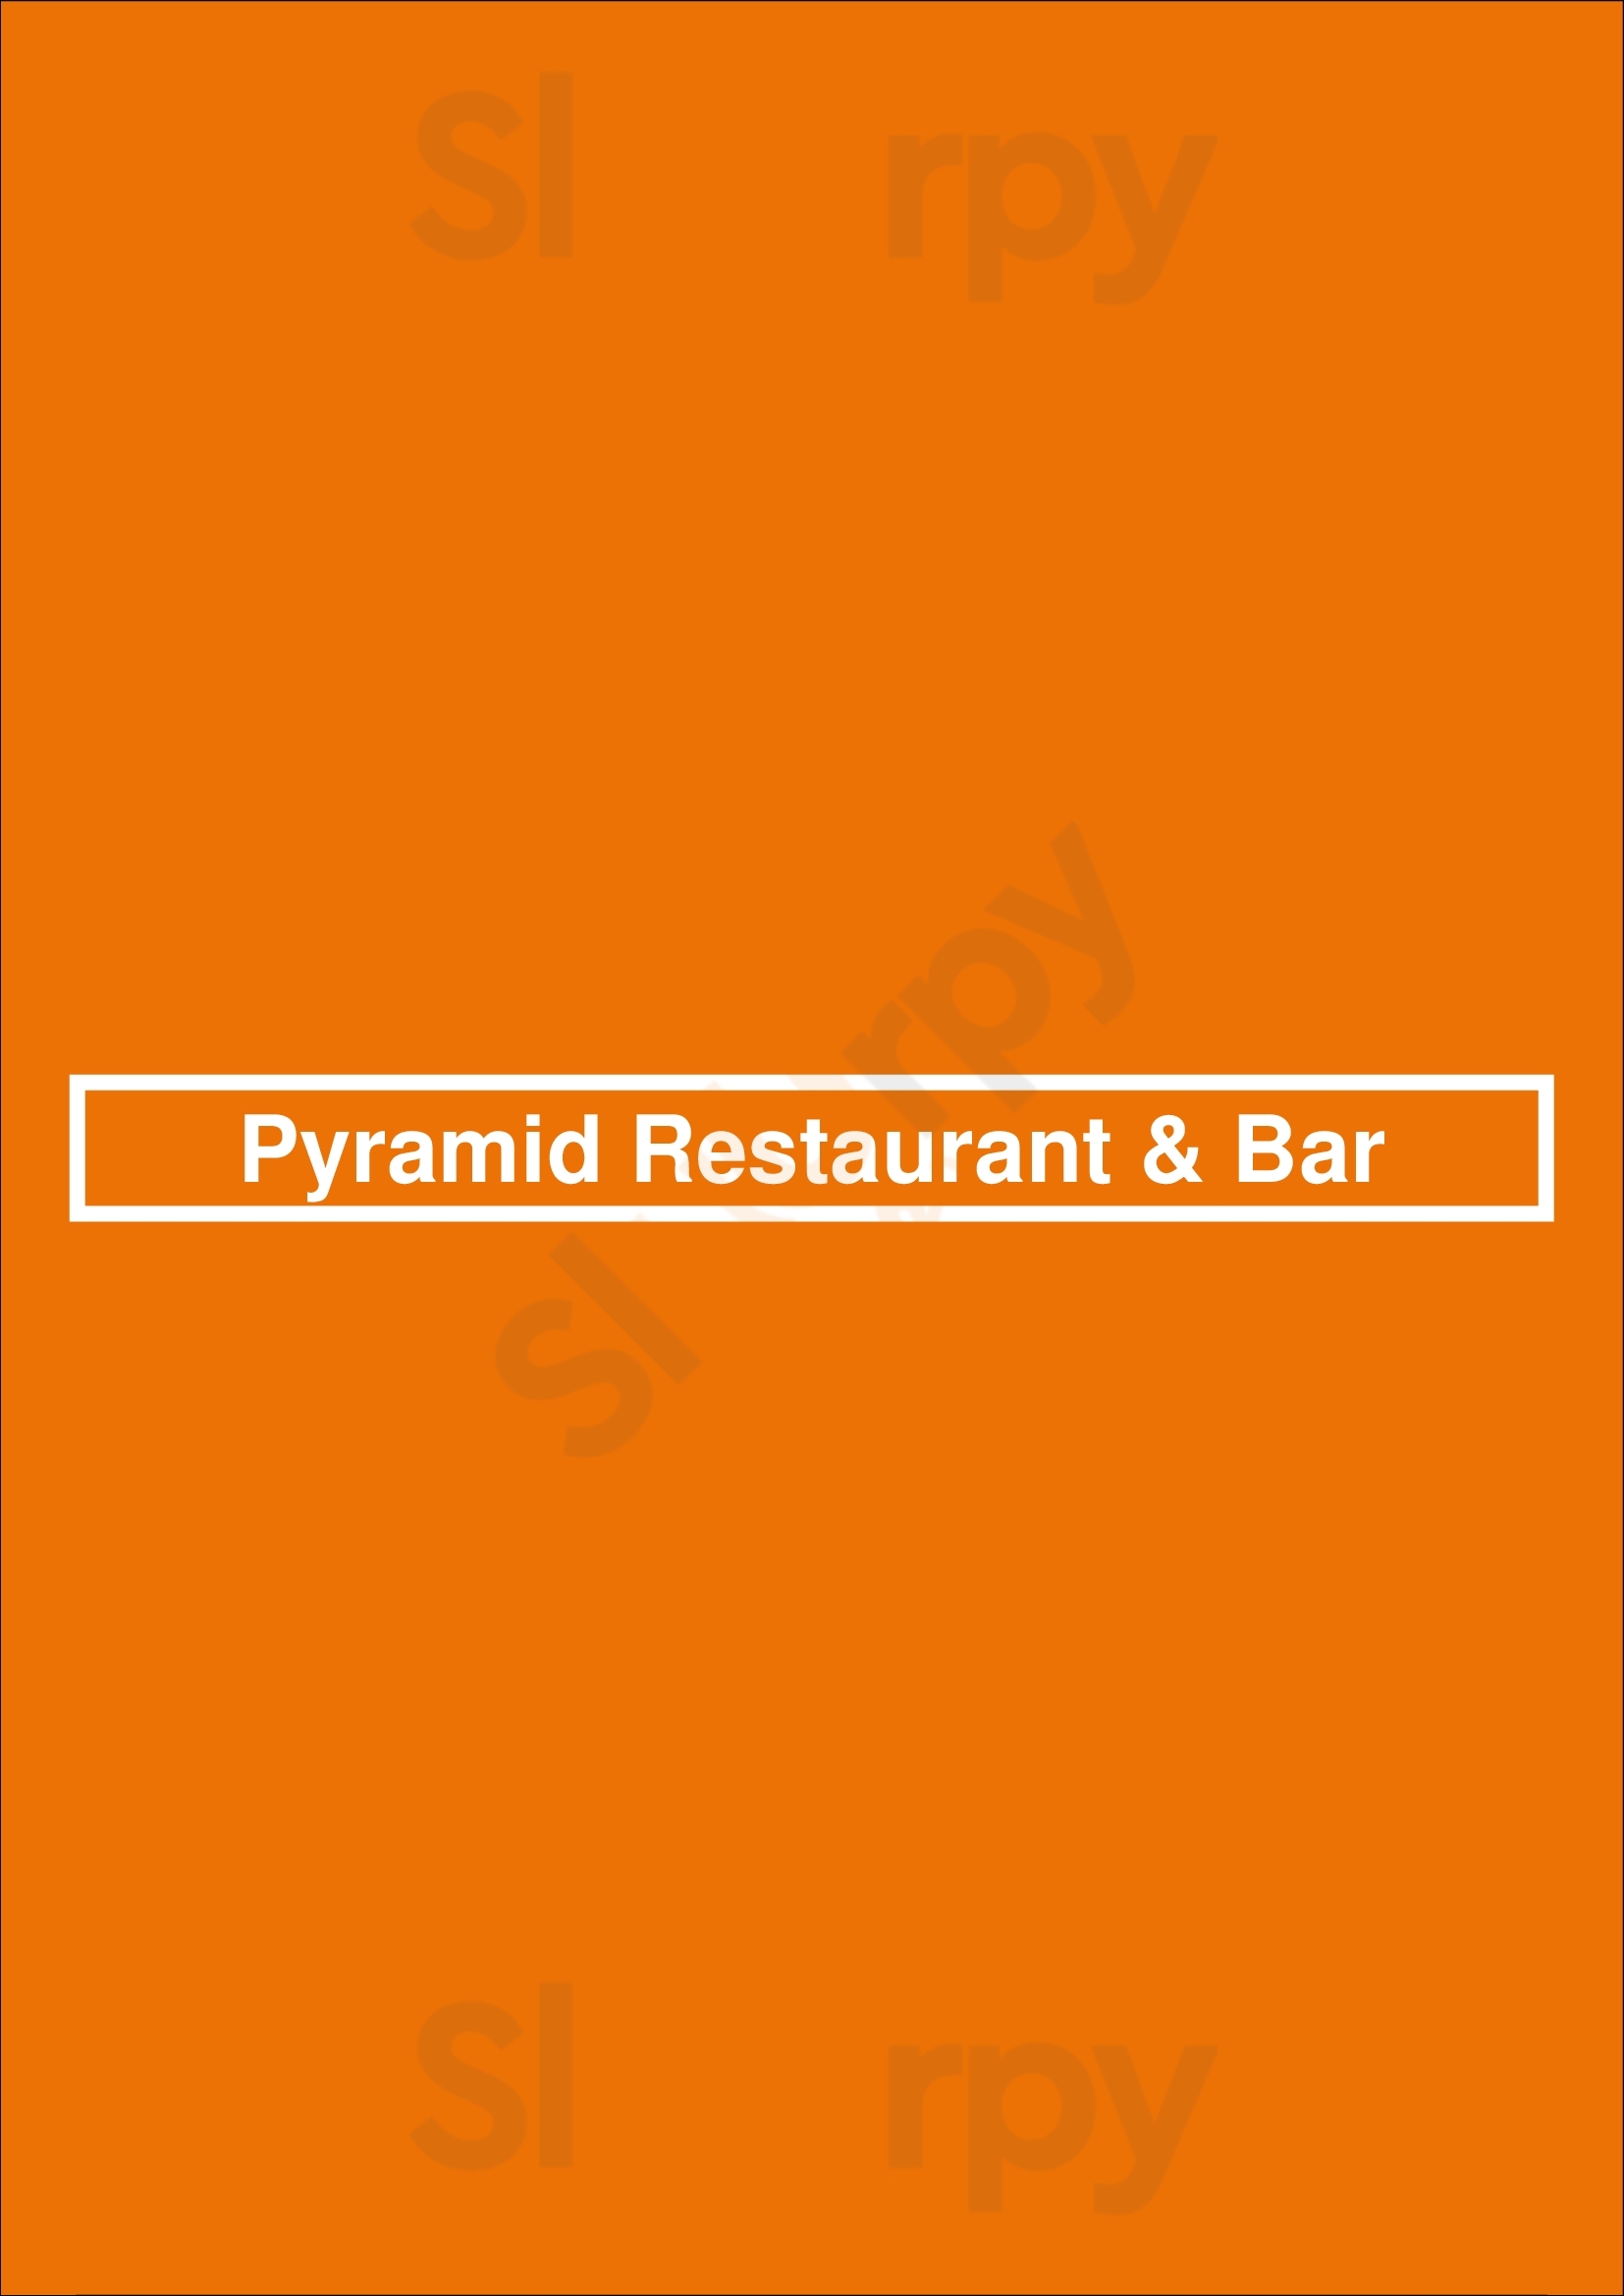 Pyramid Restaurant & Bar Dallas Menu - 1